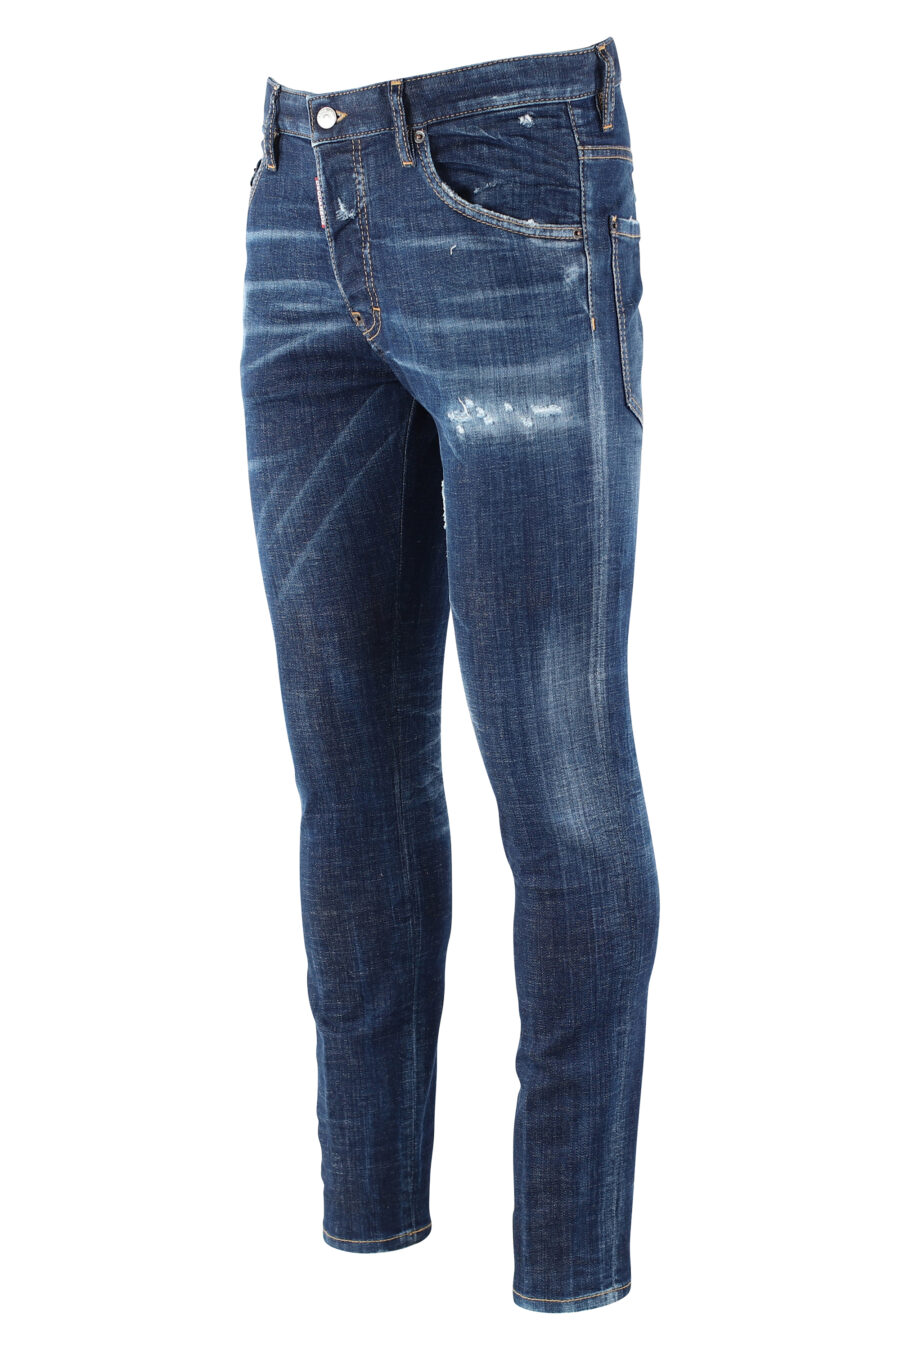 Jeanshose "icon skater jean" dunkelblau semi-getragen - IMG 9655 1